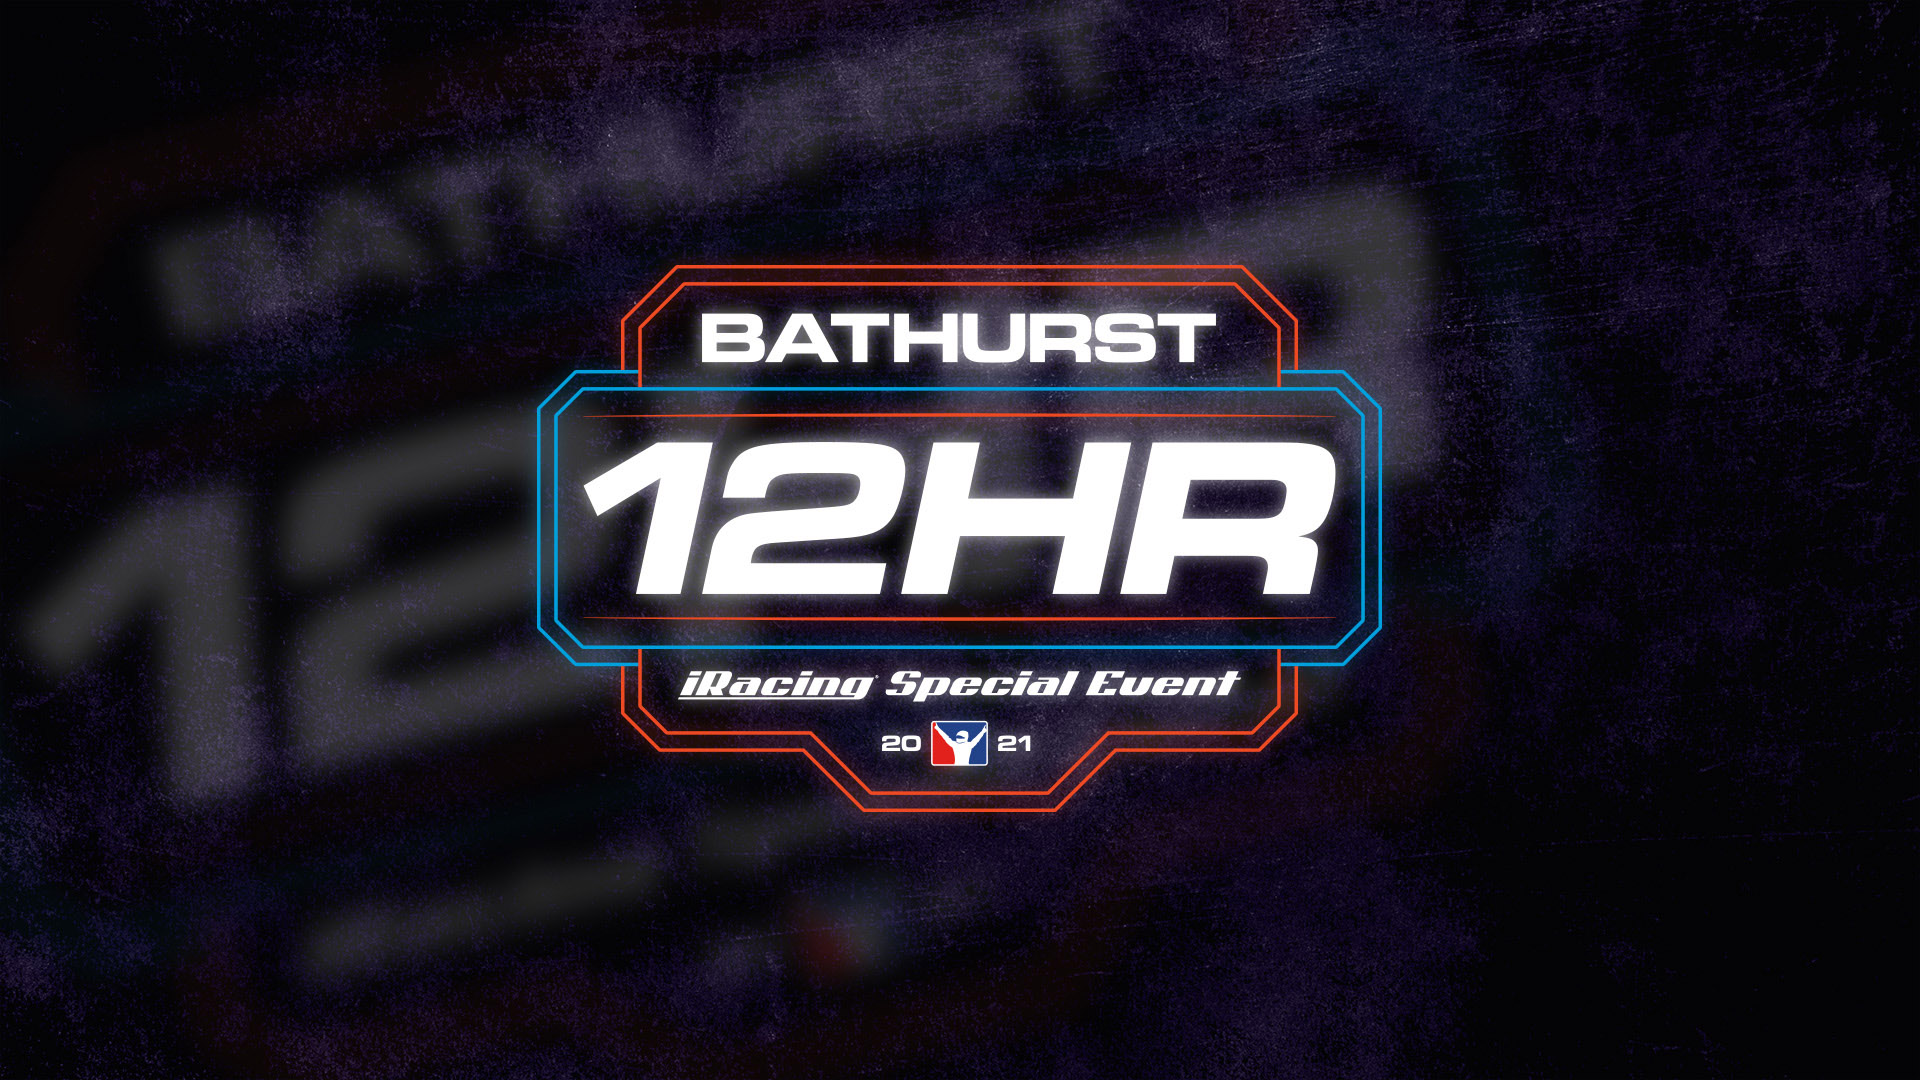 iRSE-Bathurst-12HR-feature.jpg